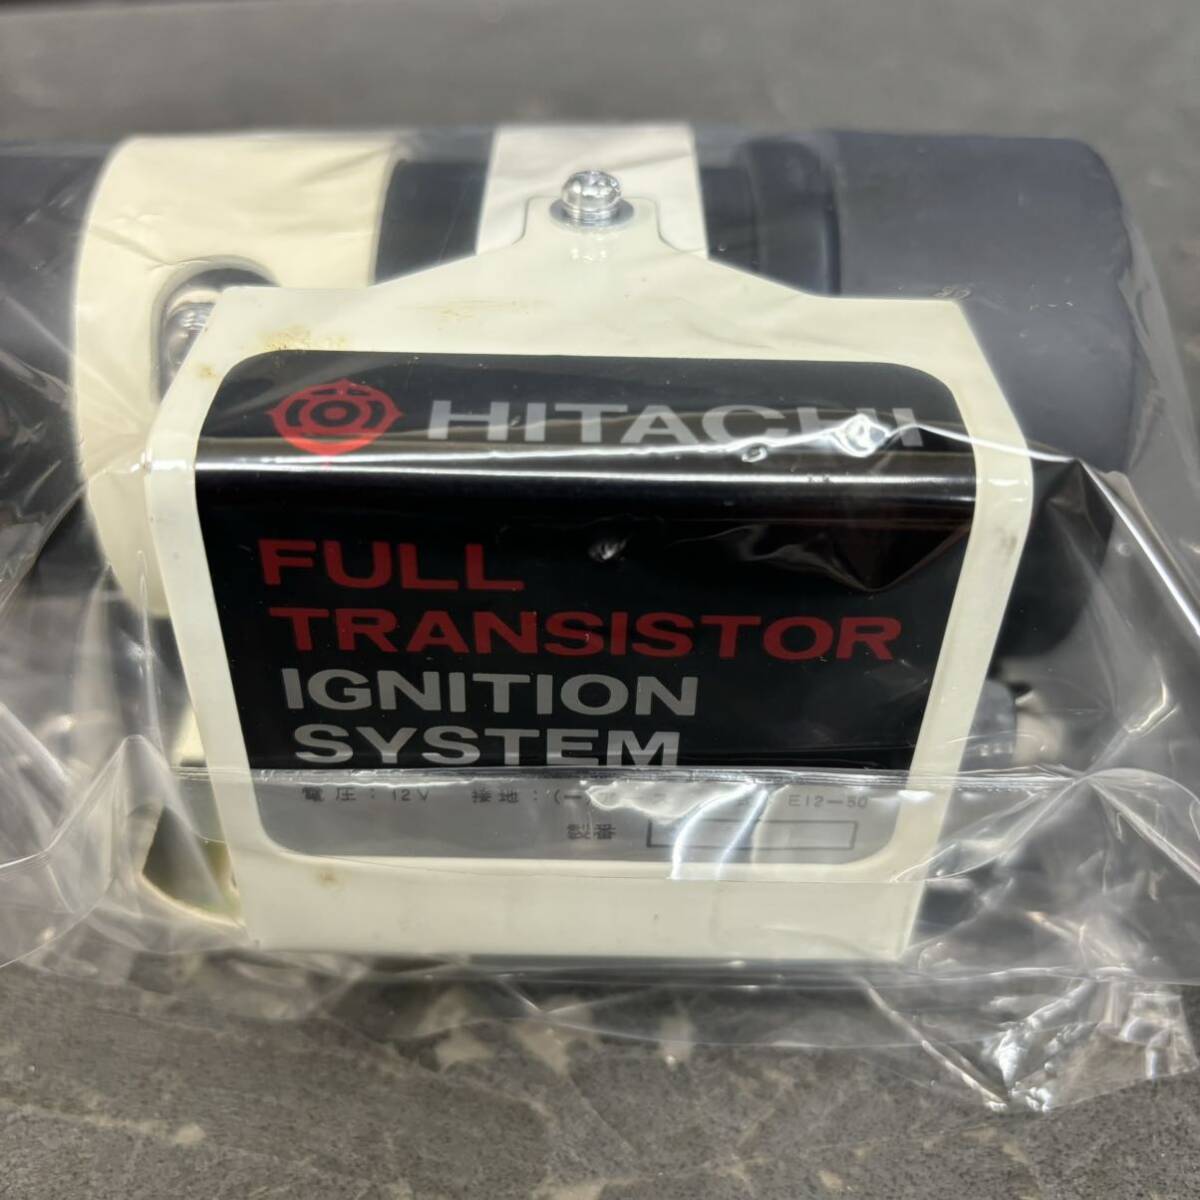  super valuable unused Hitachi full transistor ignition system ignition 12V Nissan Skyline Gloria Cedric GTR old car parts 